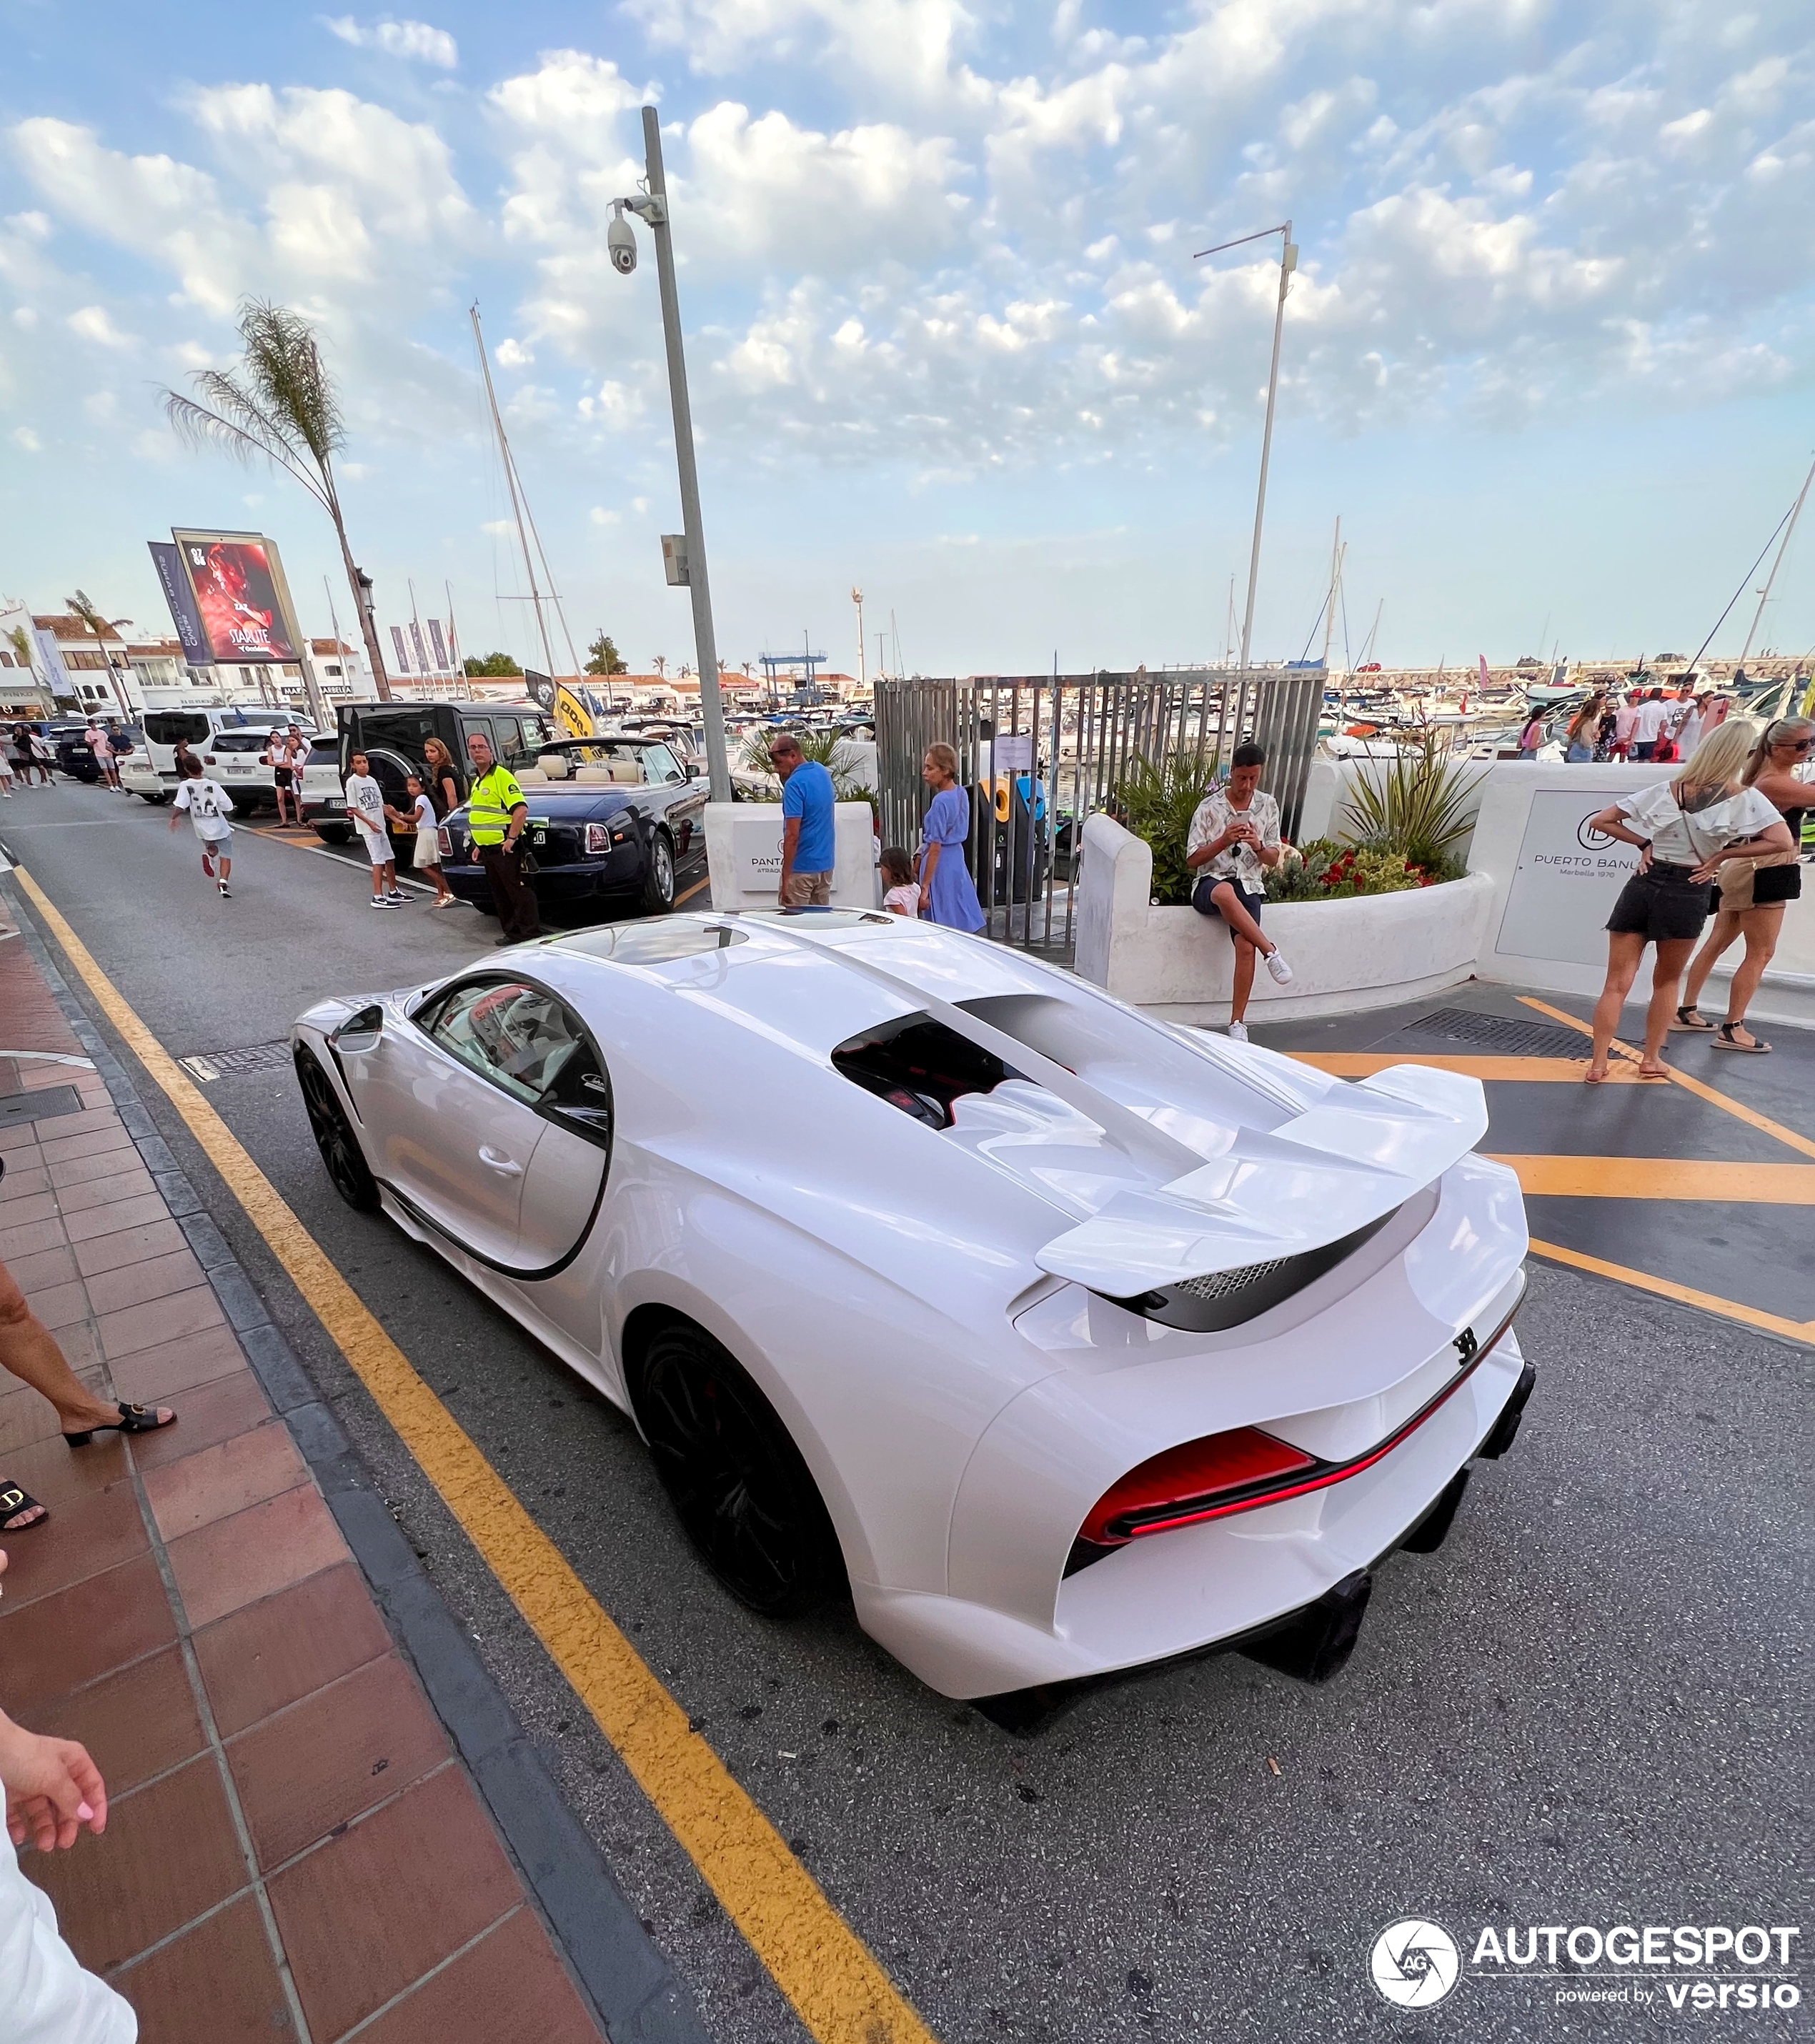 The Bugatti Chiron Super Sport Hermes shows up in Marbella